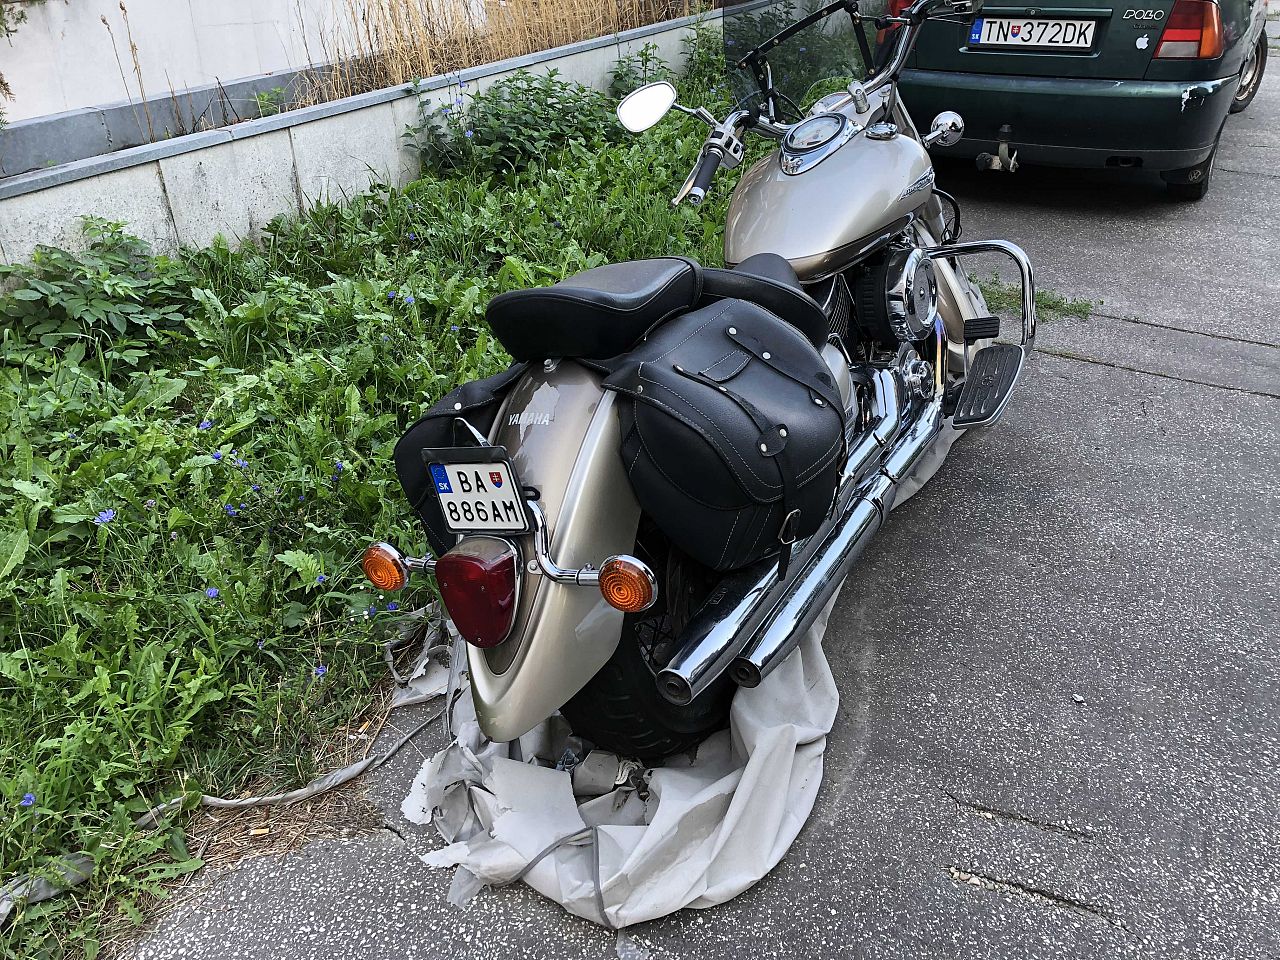 Lachova - dlhodobo odstavený motocykel Yamaha, Petržalka, Bratislava |  Odkazprestarostu.sk